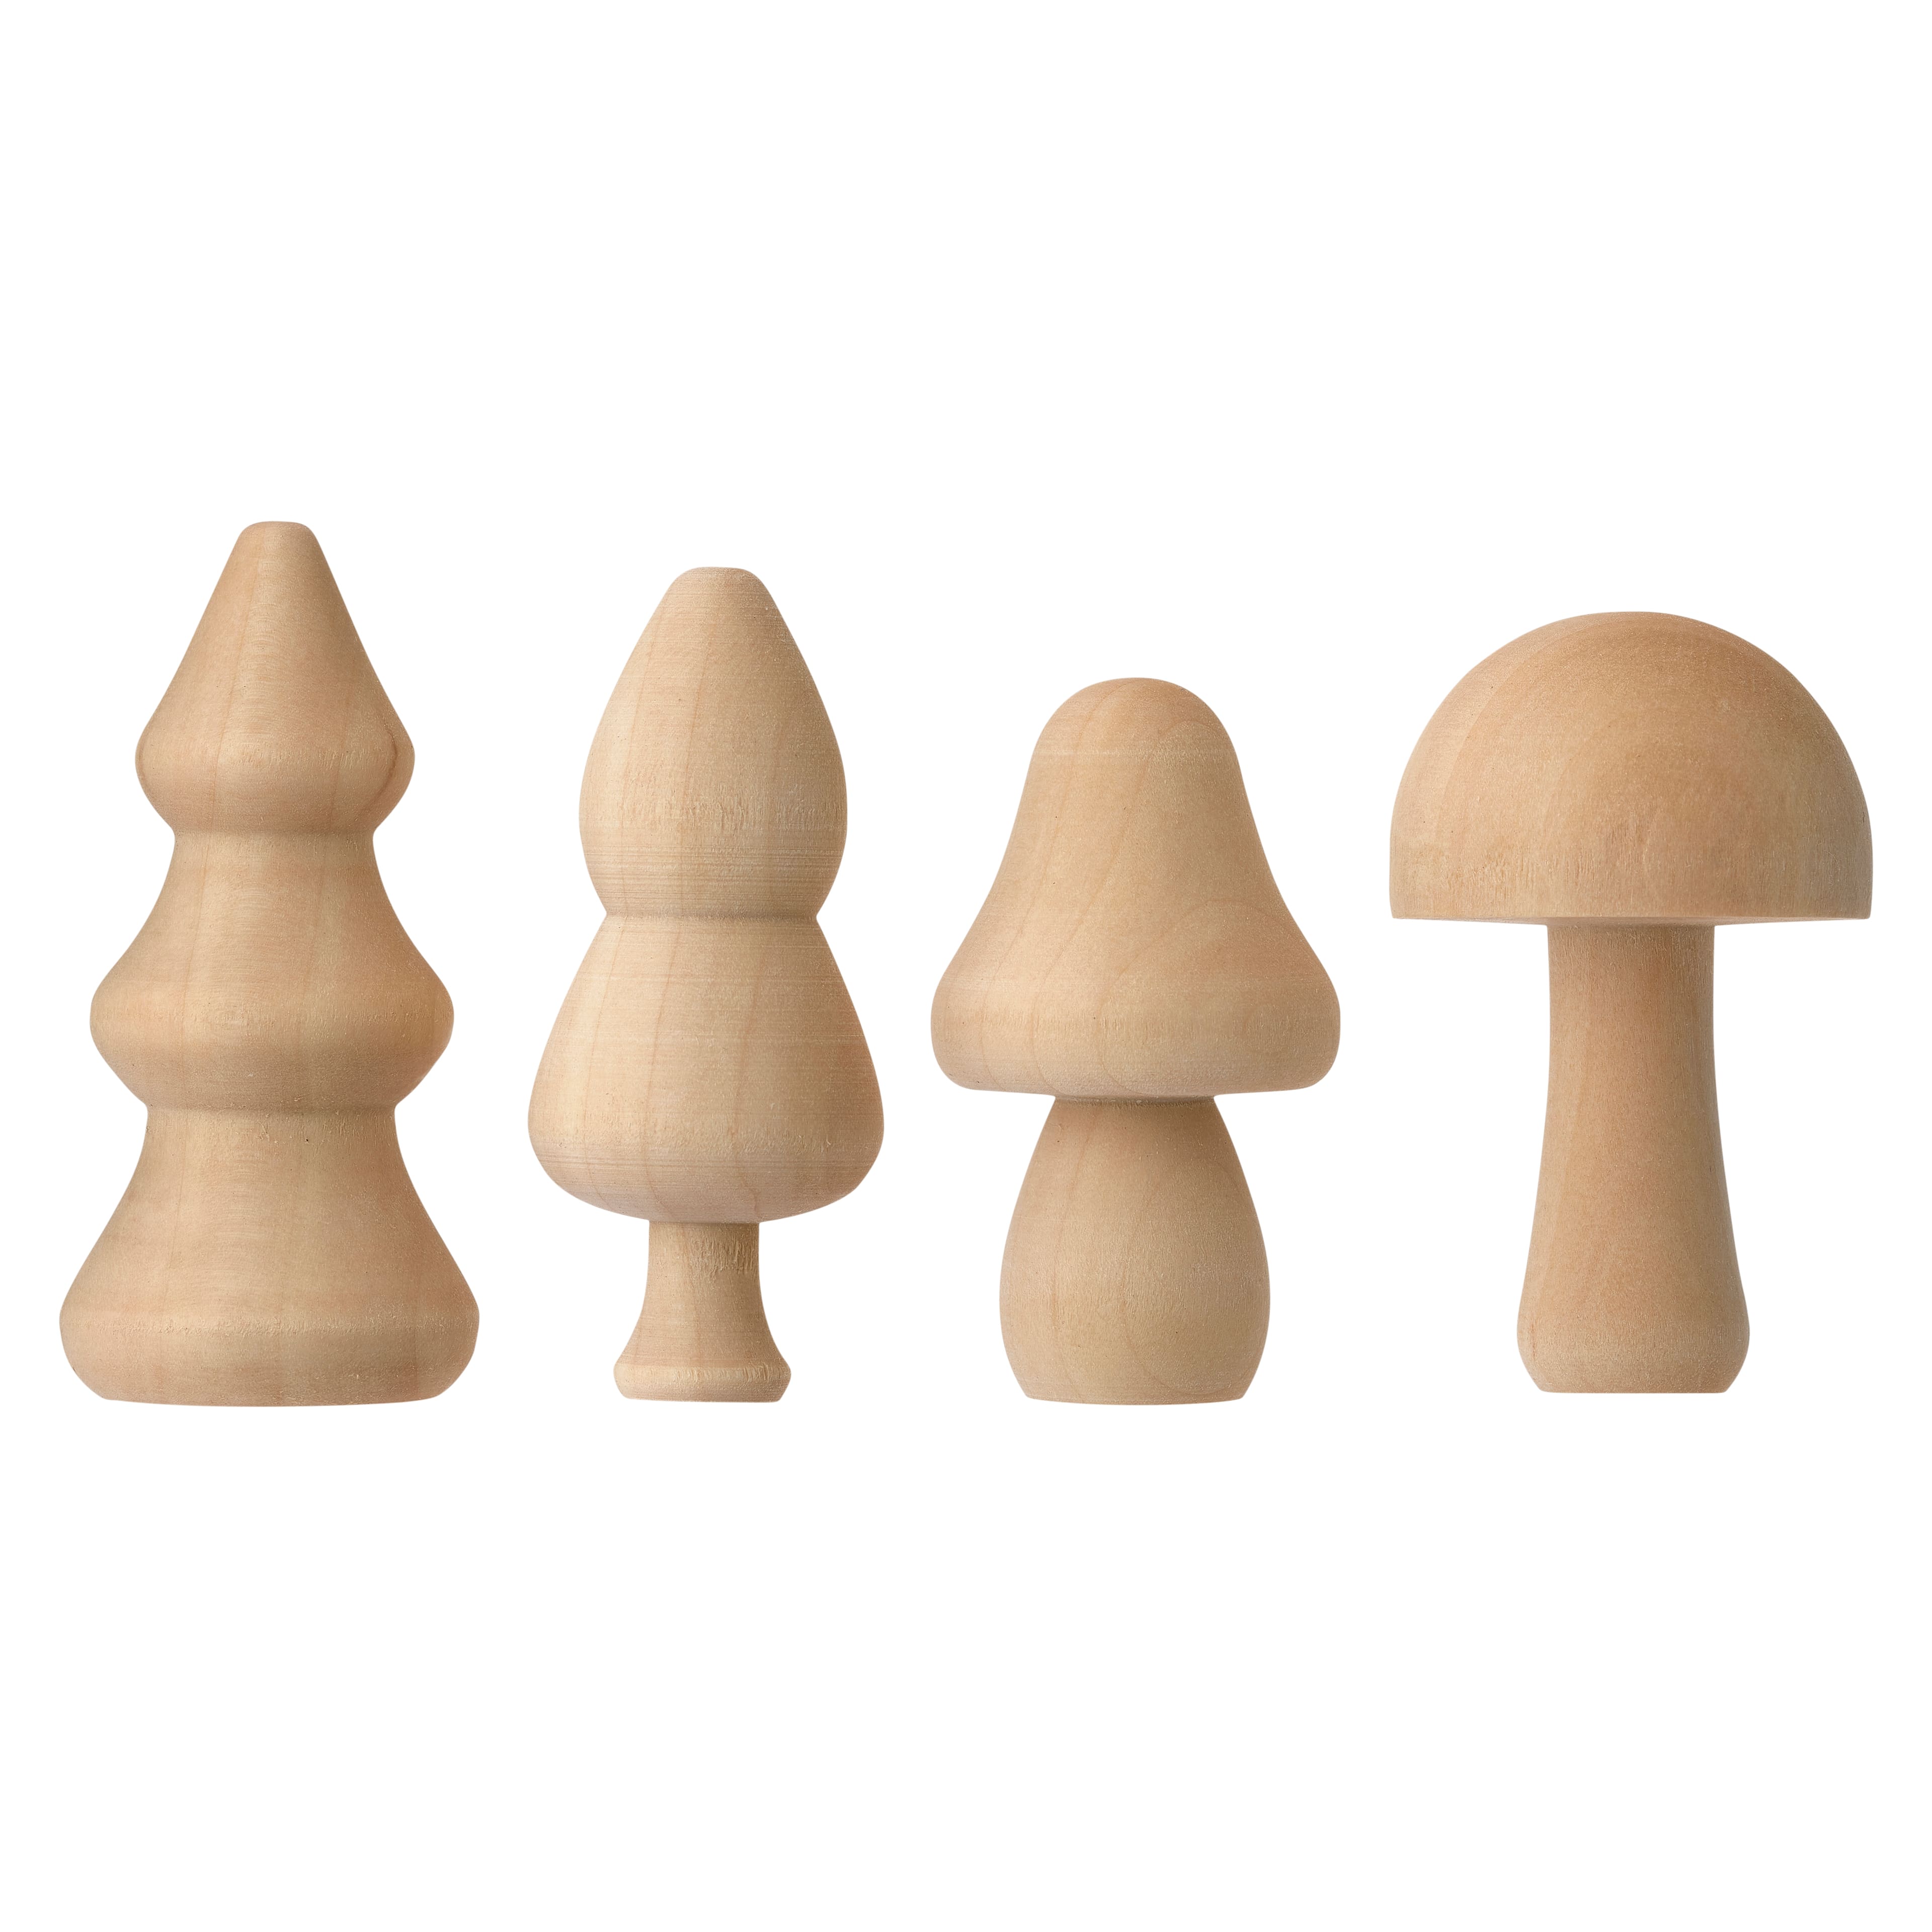 12 Packs: 4 ct. (48 total) Mushroom &#x26; Tree Peg Figures by Creatology&#x2122;